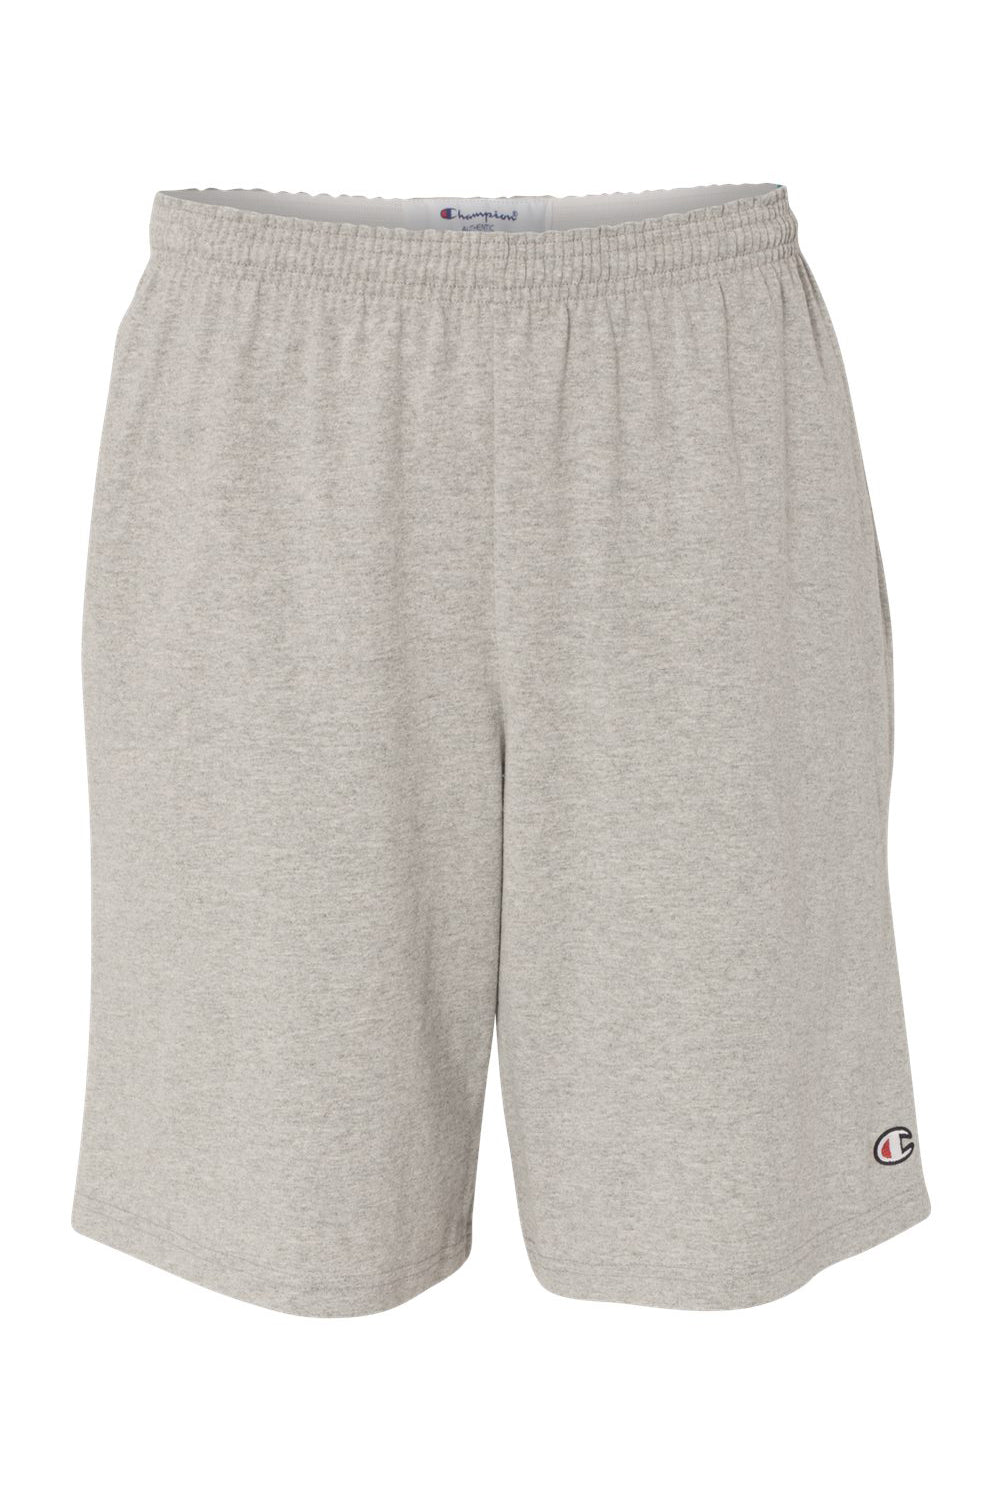 Champion 8180 Mens Shorts w/ Pockets Oxford Grey Flat Front